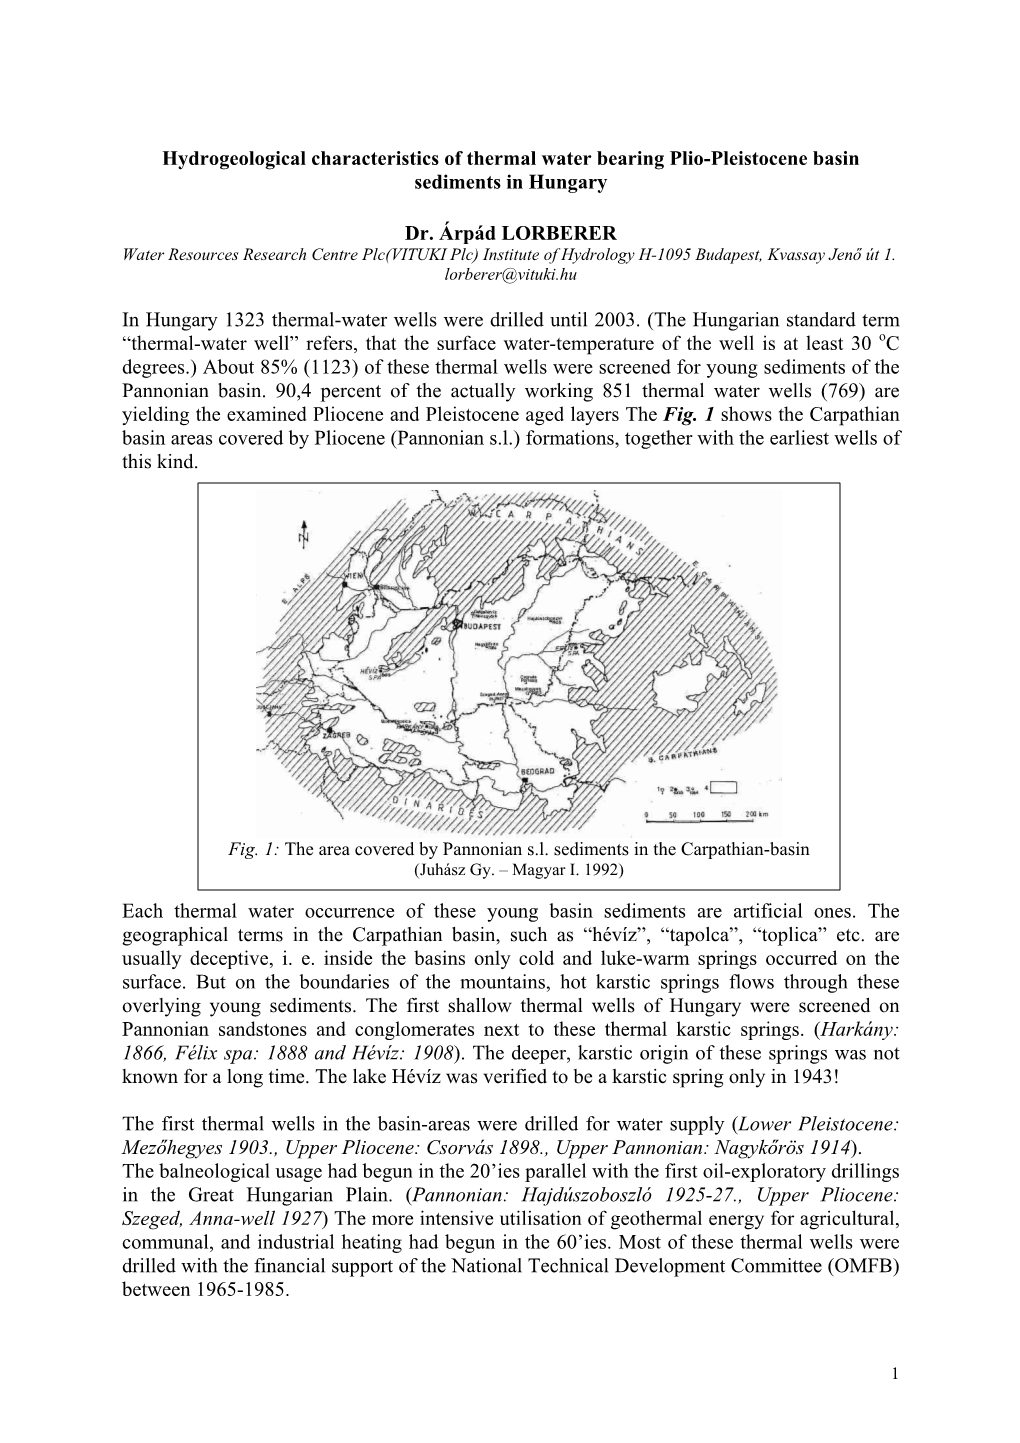 Hydrogeological Characteristics of Thermal Water Bearing Plio-Pleistocene Basin Sediments in Hungary